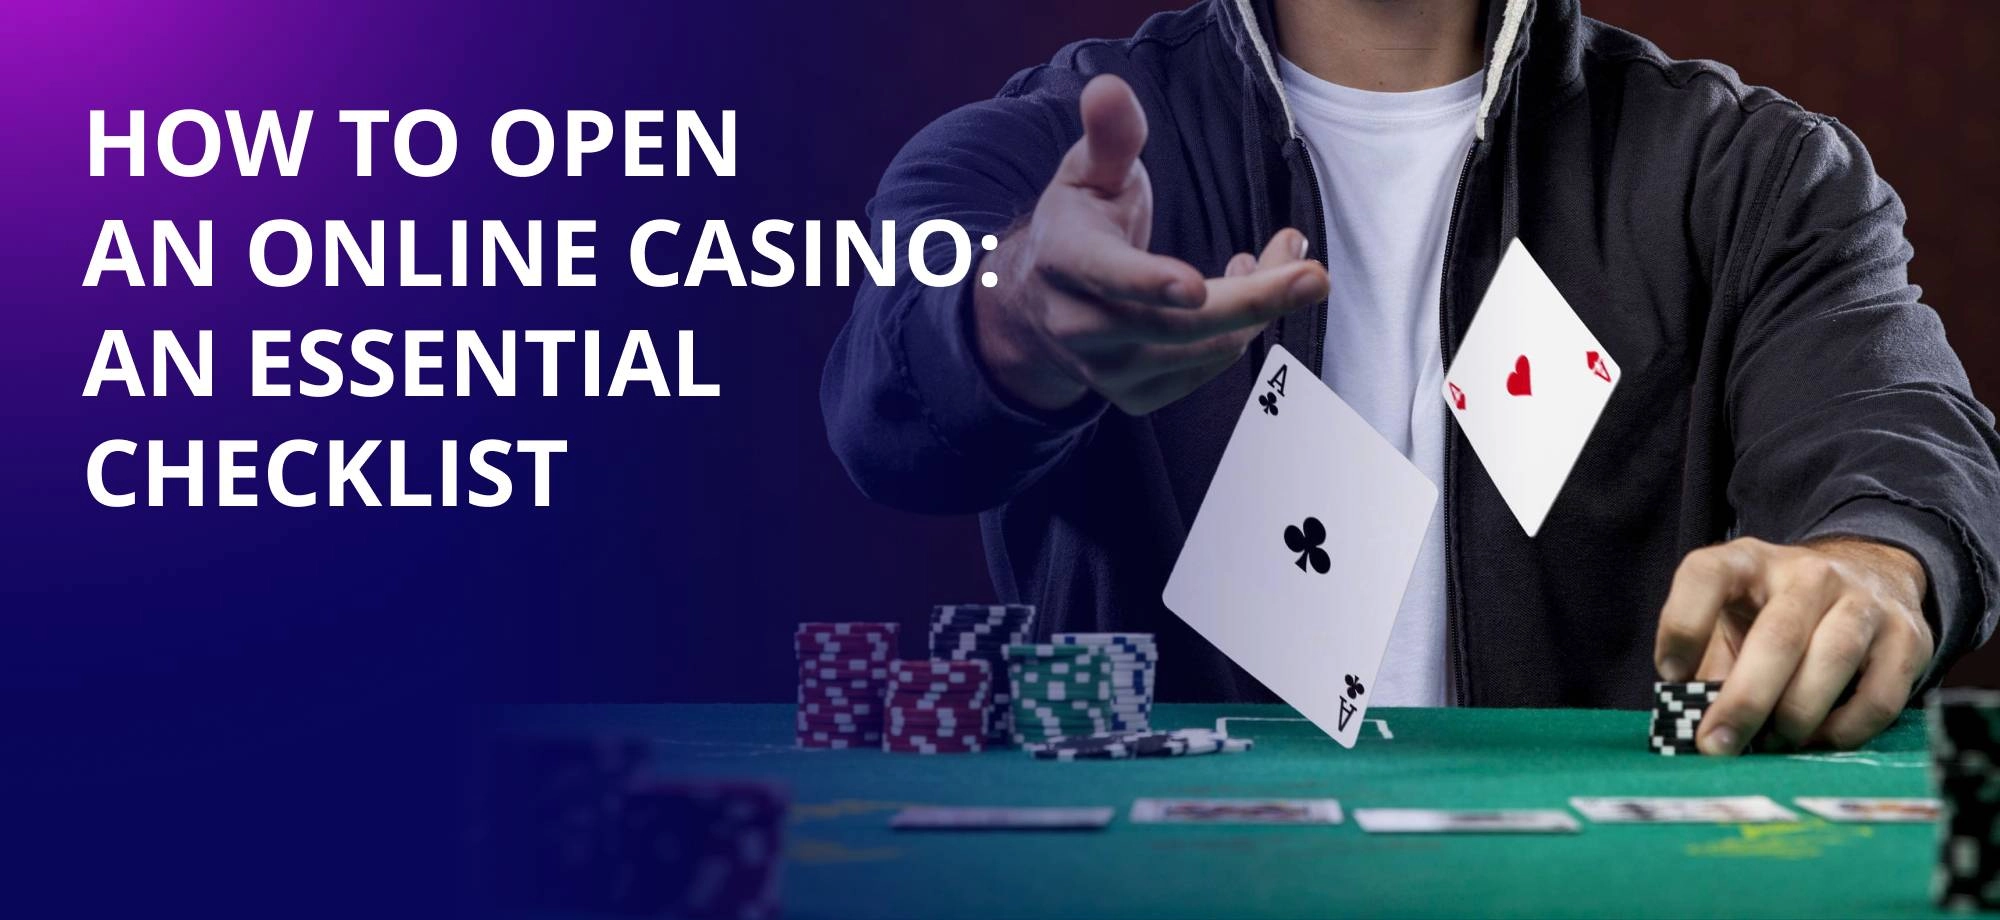 How to Open an Online Casino: An Essential Checklist